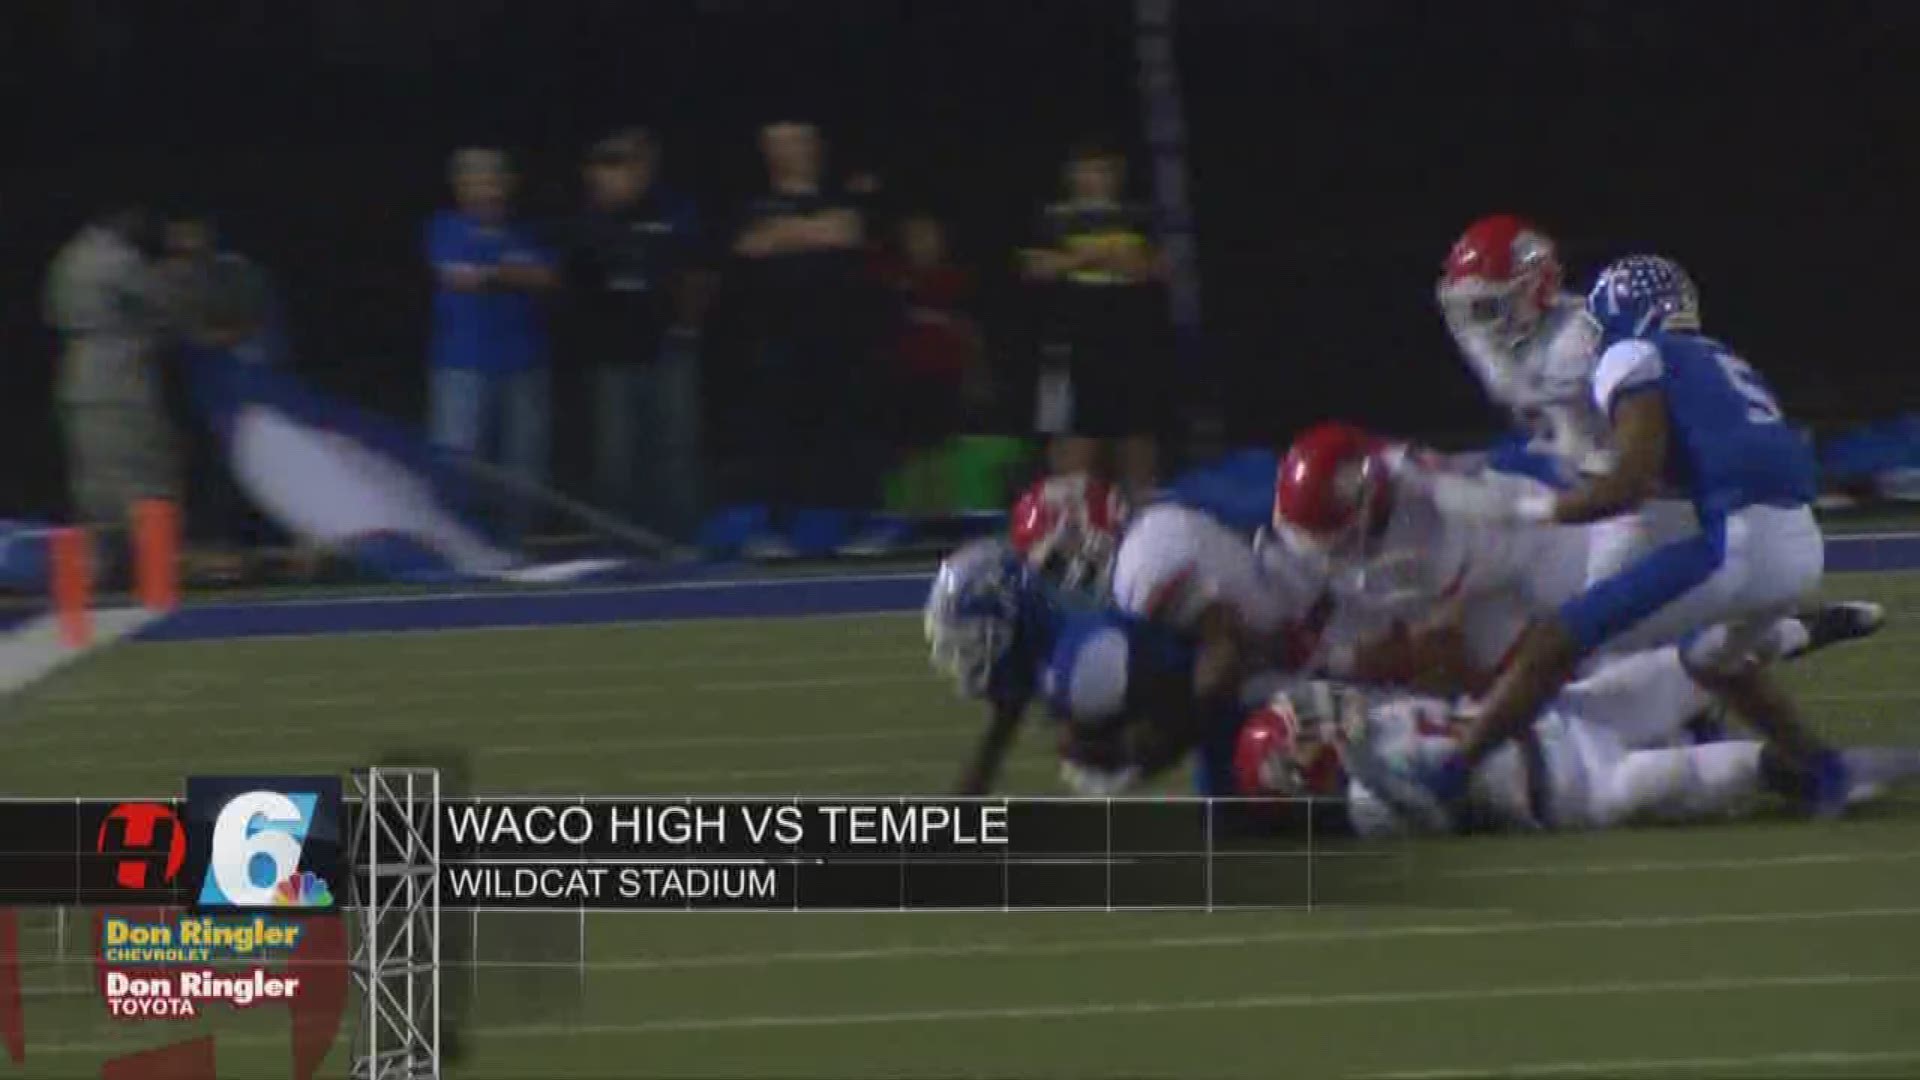 Waco High vs Temple highlights